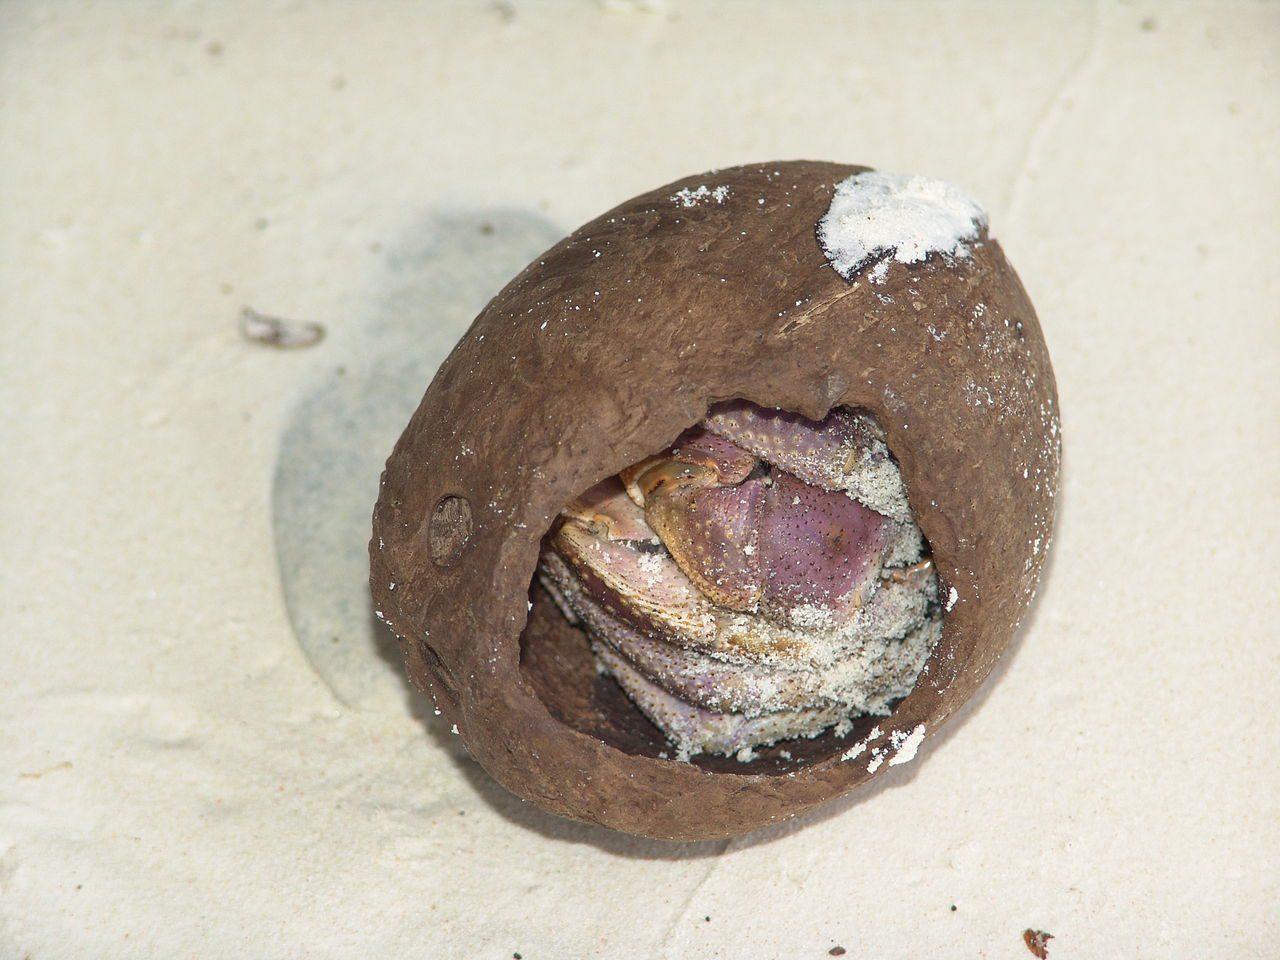 A juvenile coconut crab hidden in a coconut shell at the Chagos Archipelago.